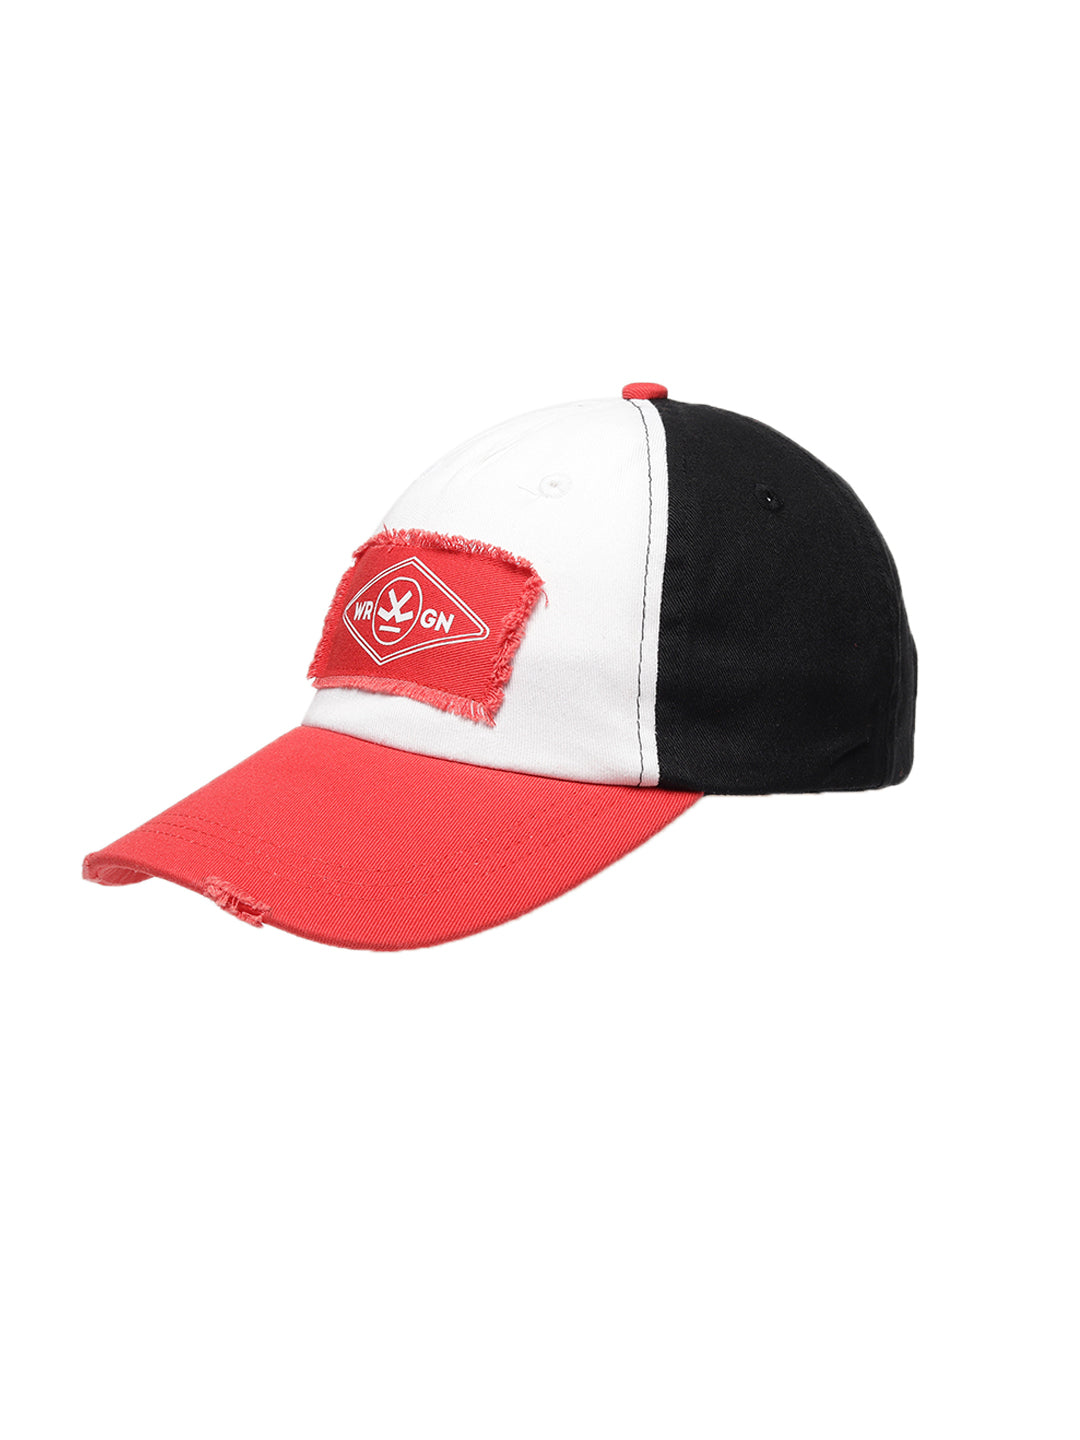 Distressed Red Baseball Cap